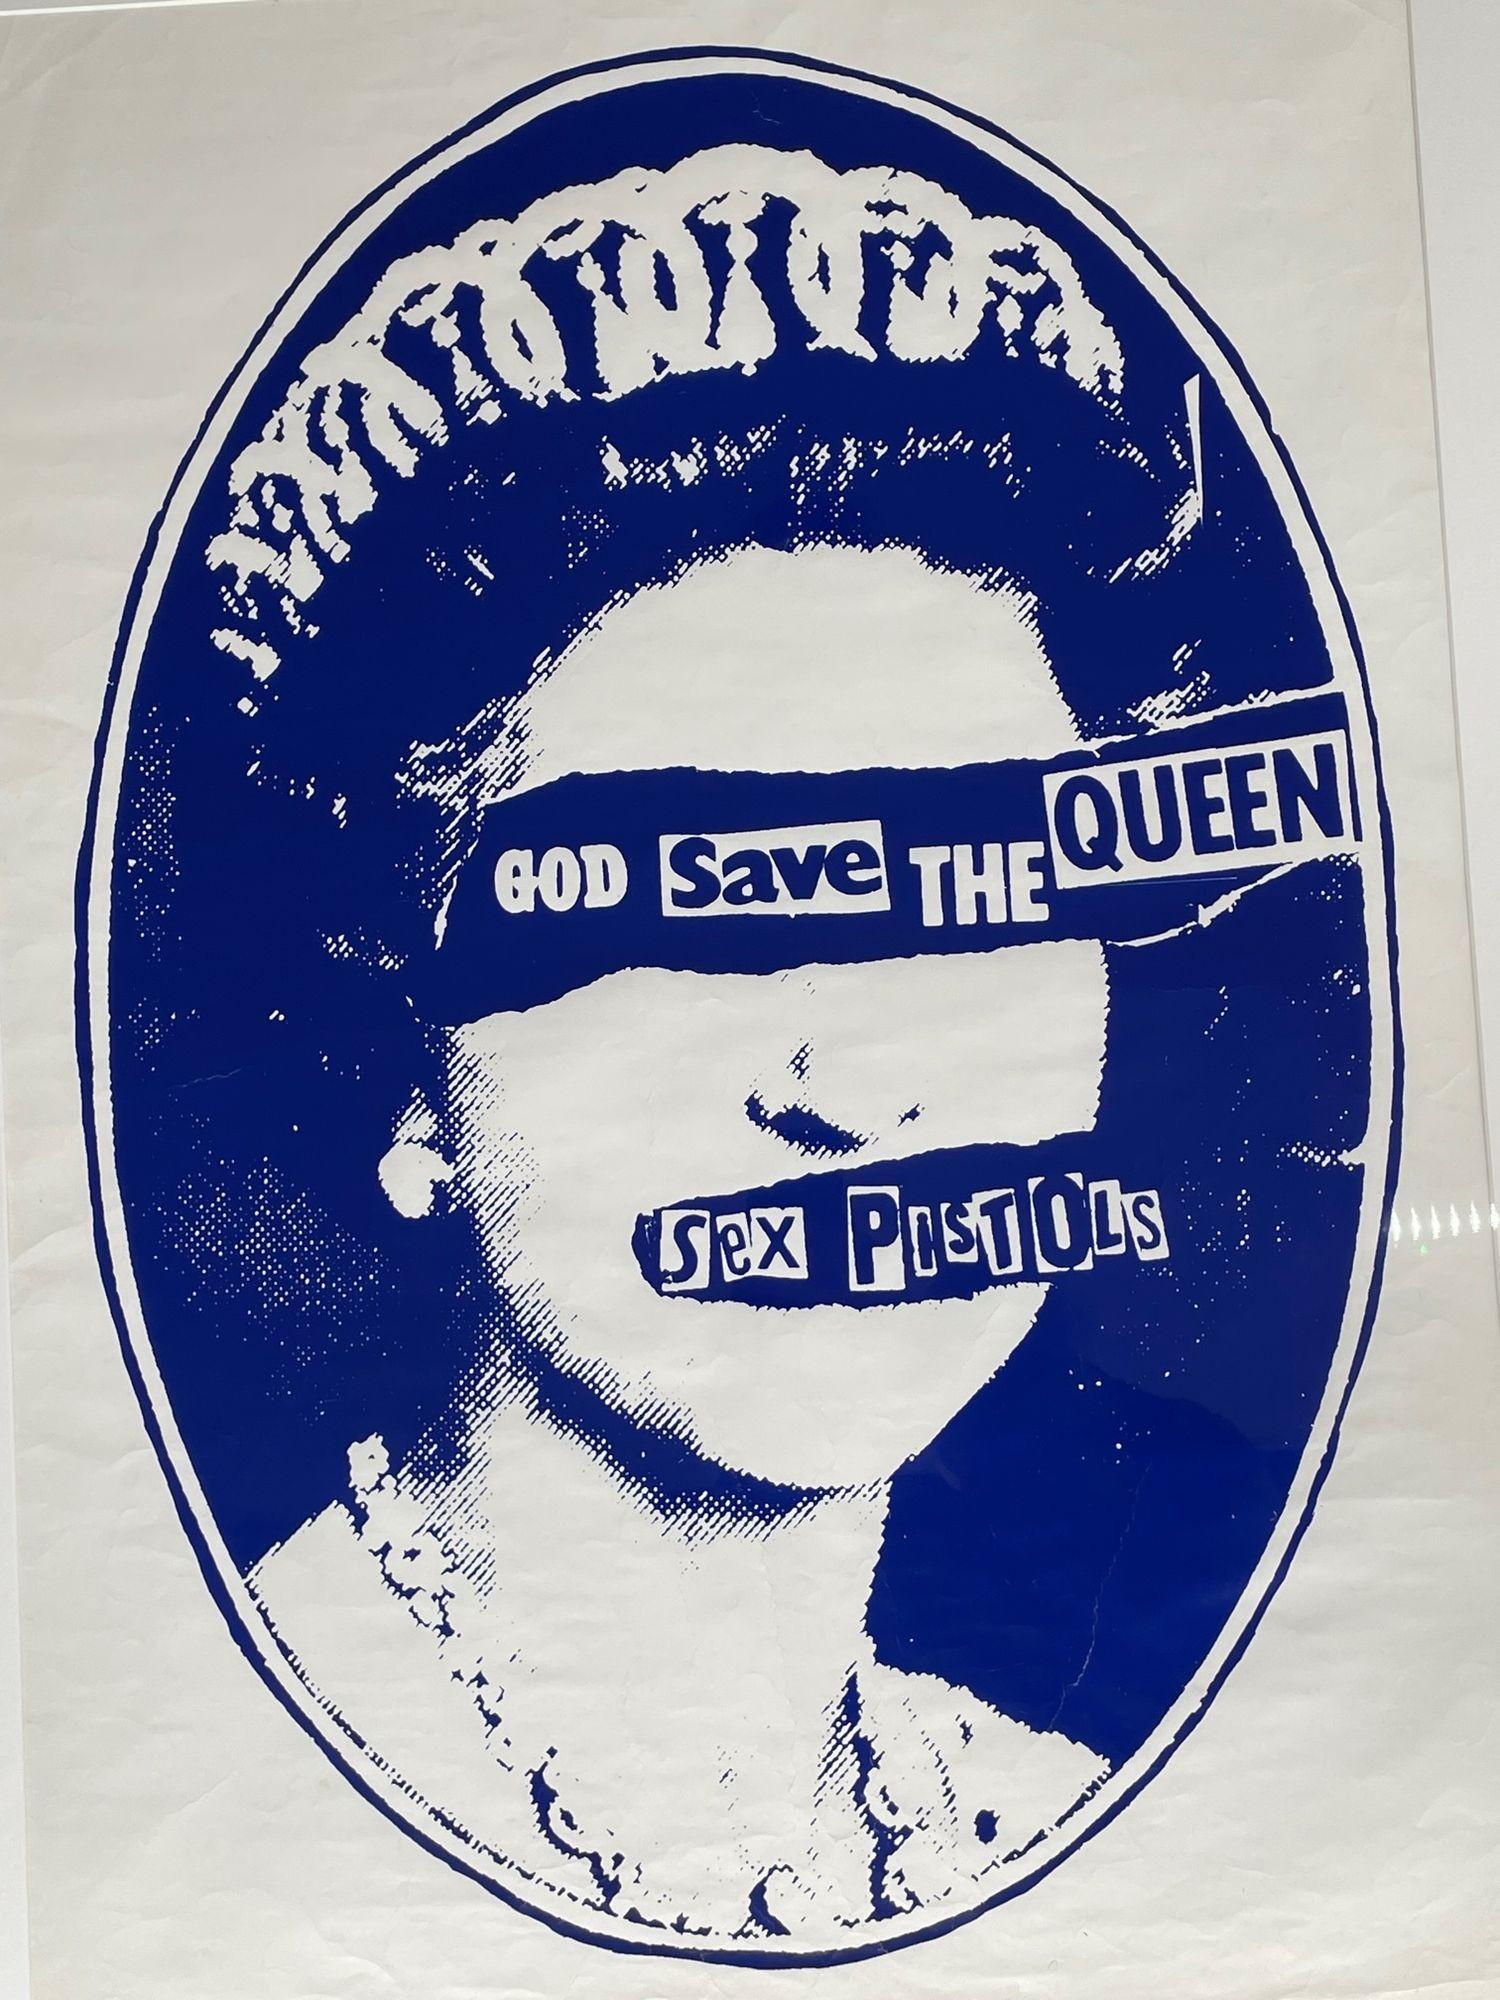 A rare Jamie Reid promo poster for The Sex Pistols 